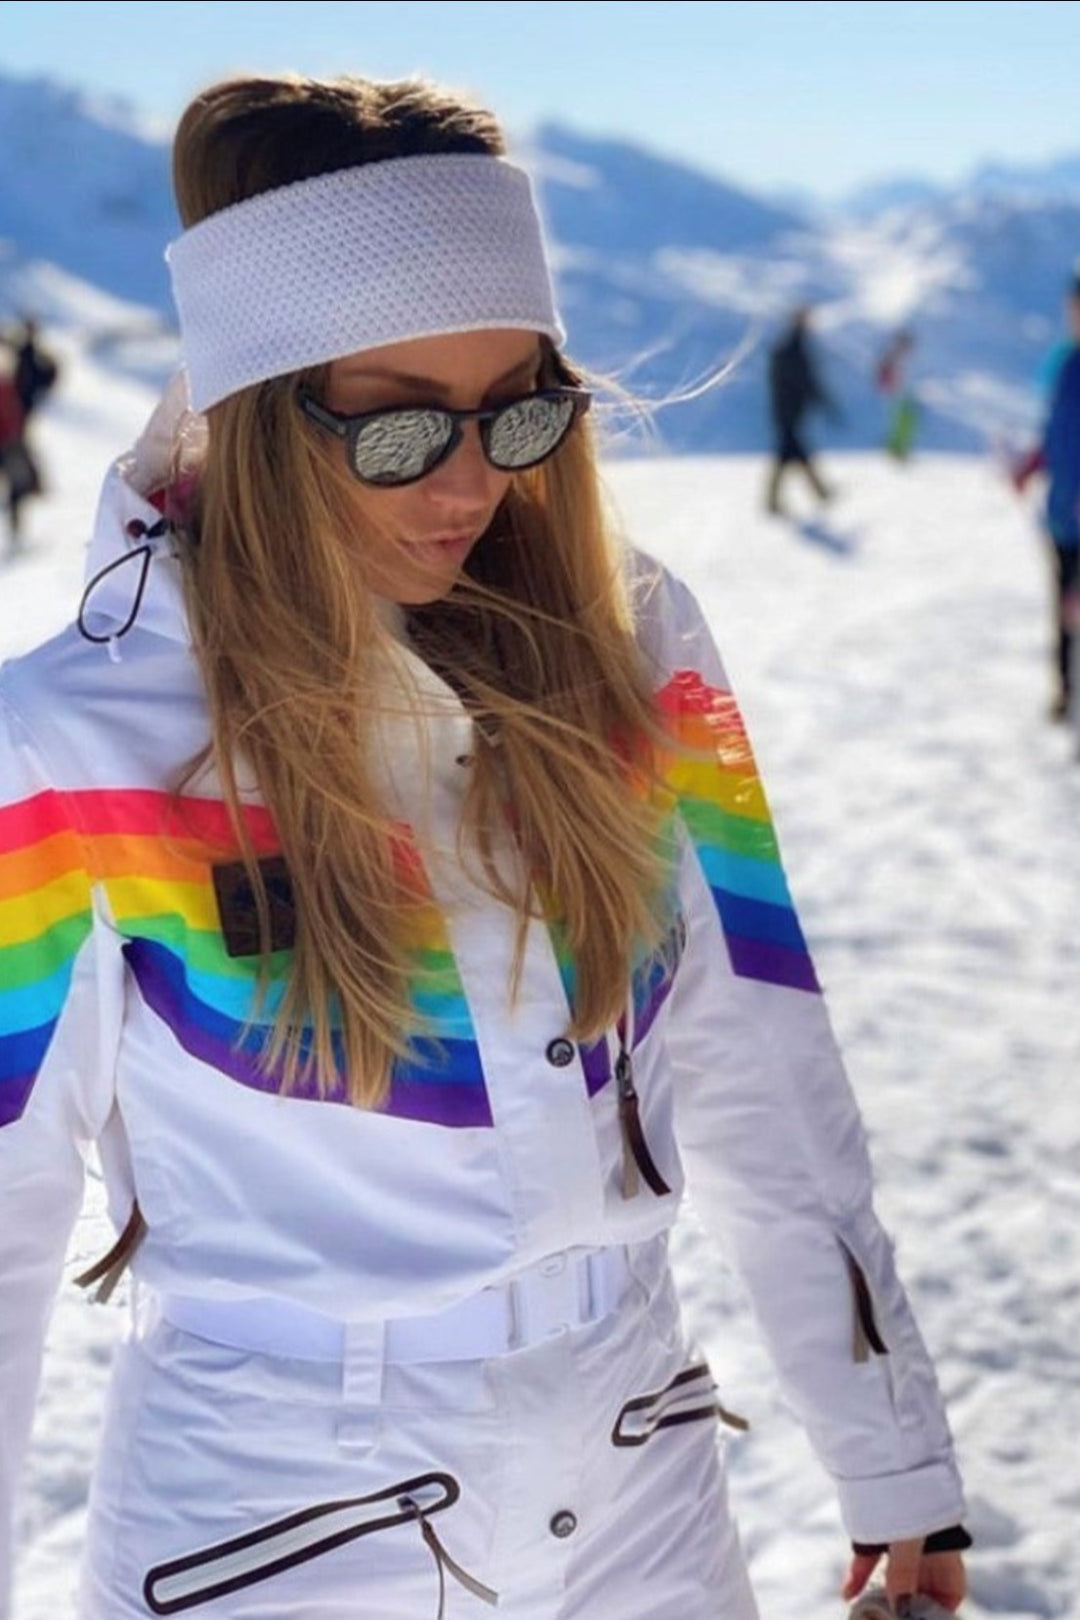 Rainbow Road Ski Suit - Women's